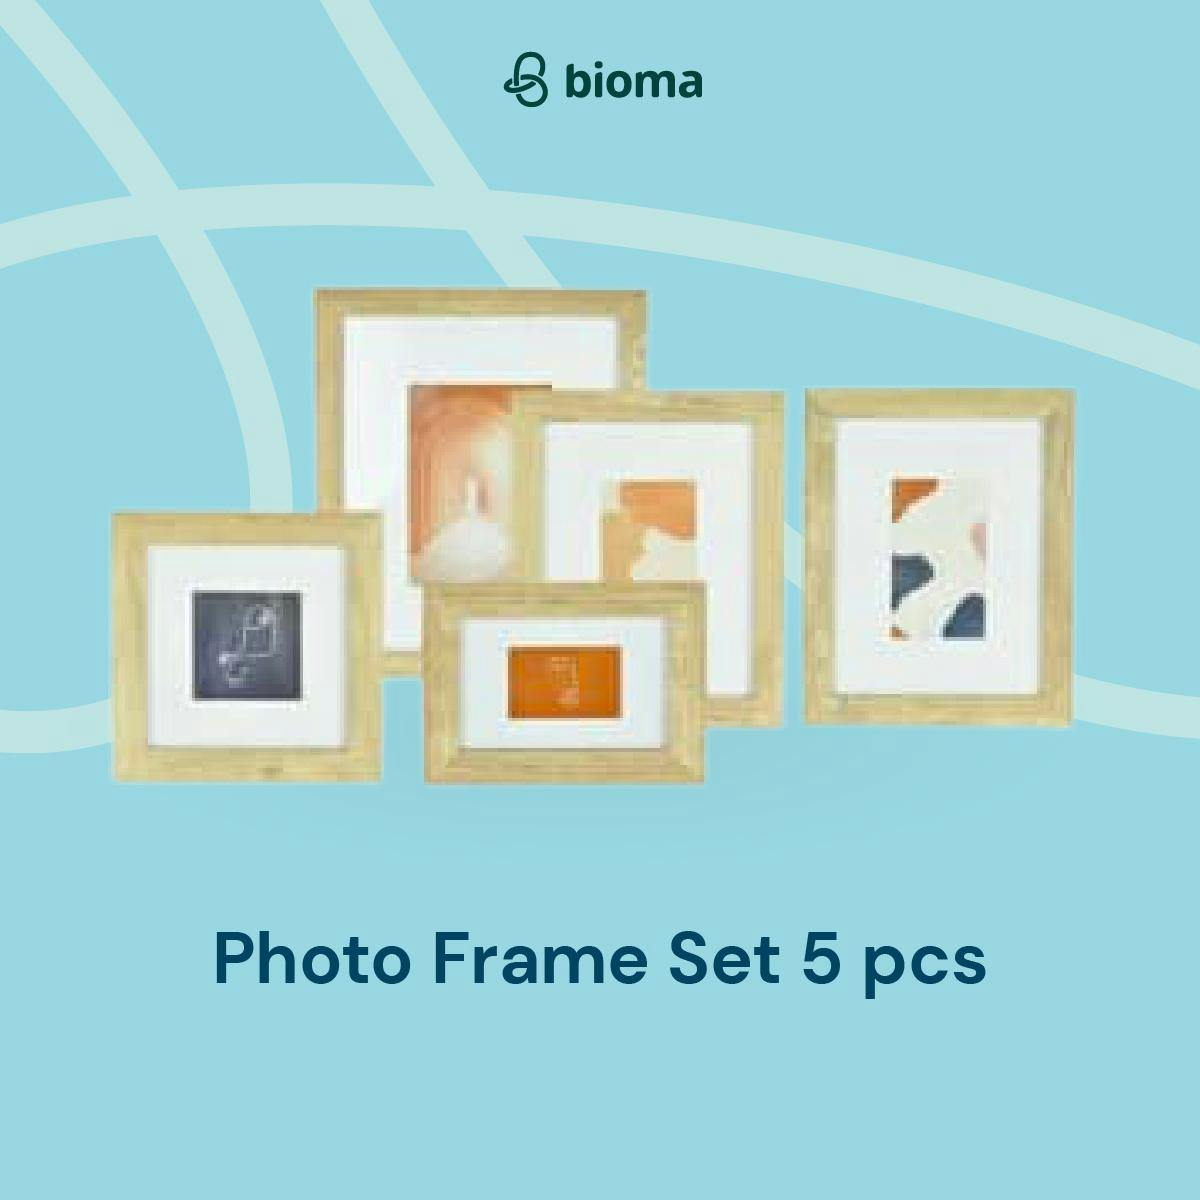 Photo Frame Set 5 pcs